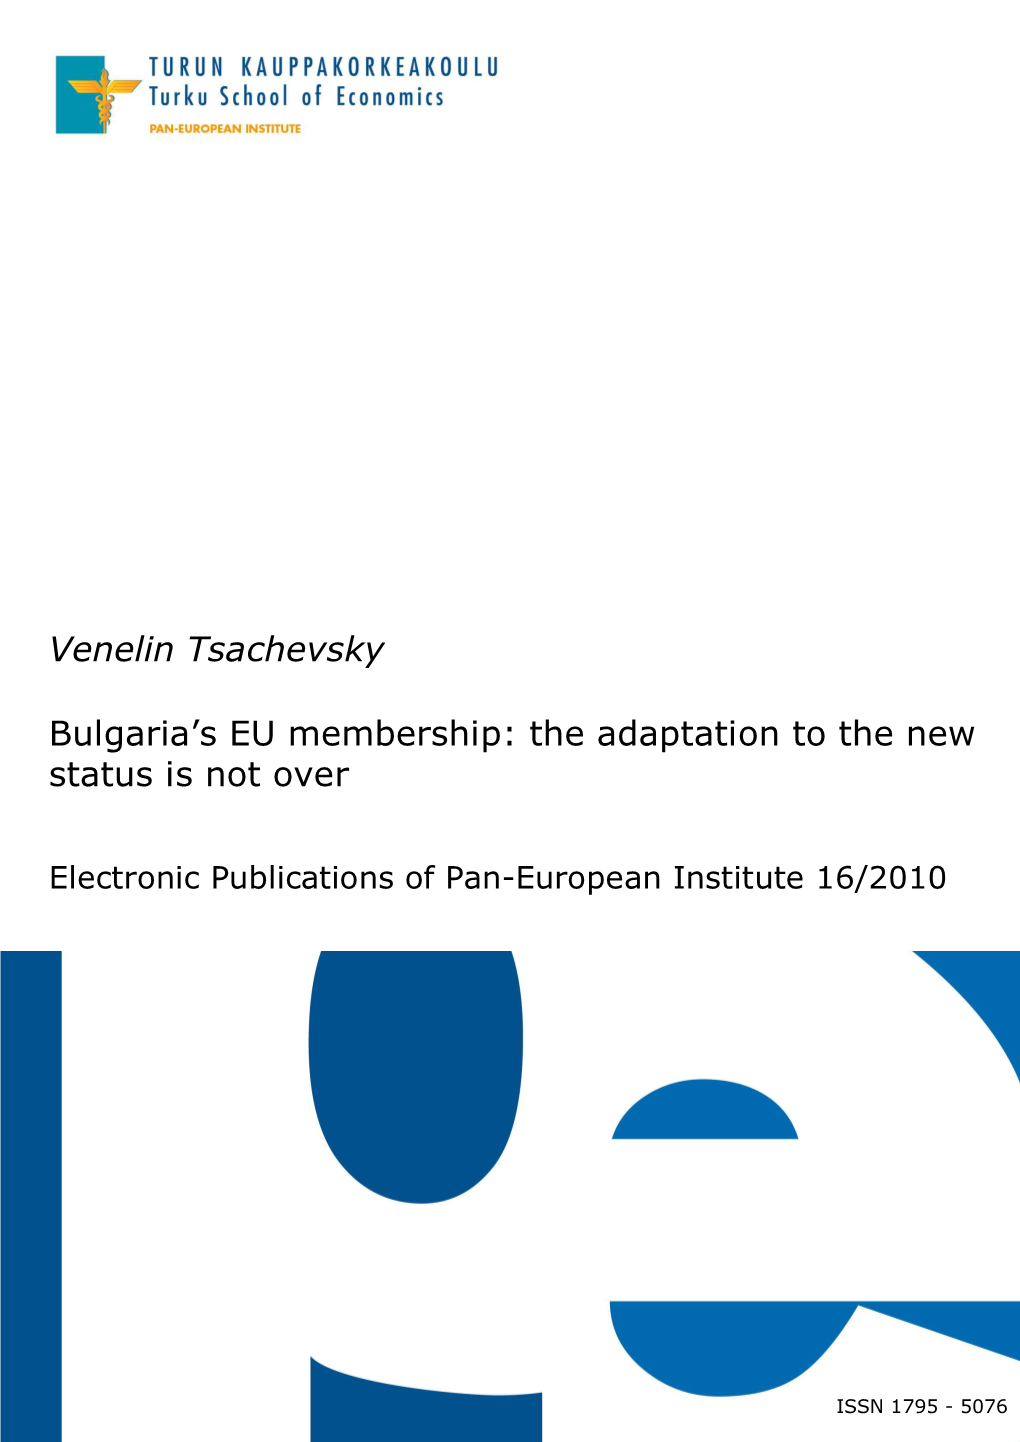 Bulgaria's EU Membership: the Adaptation to the New Status Is Not